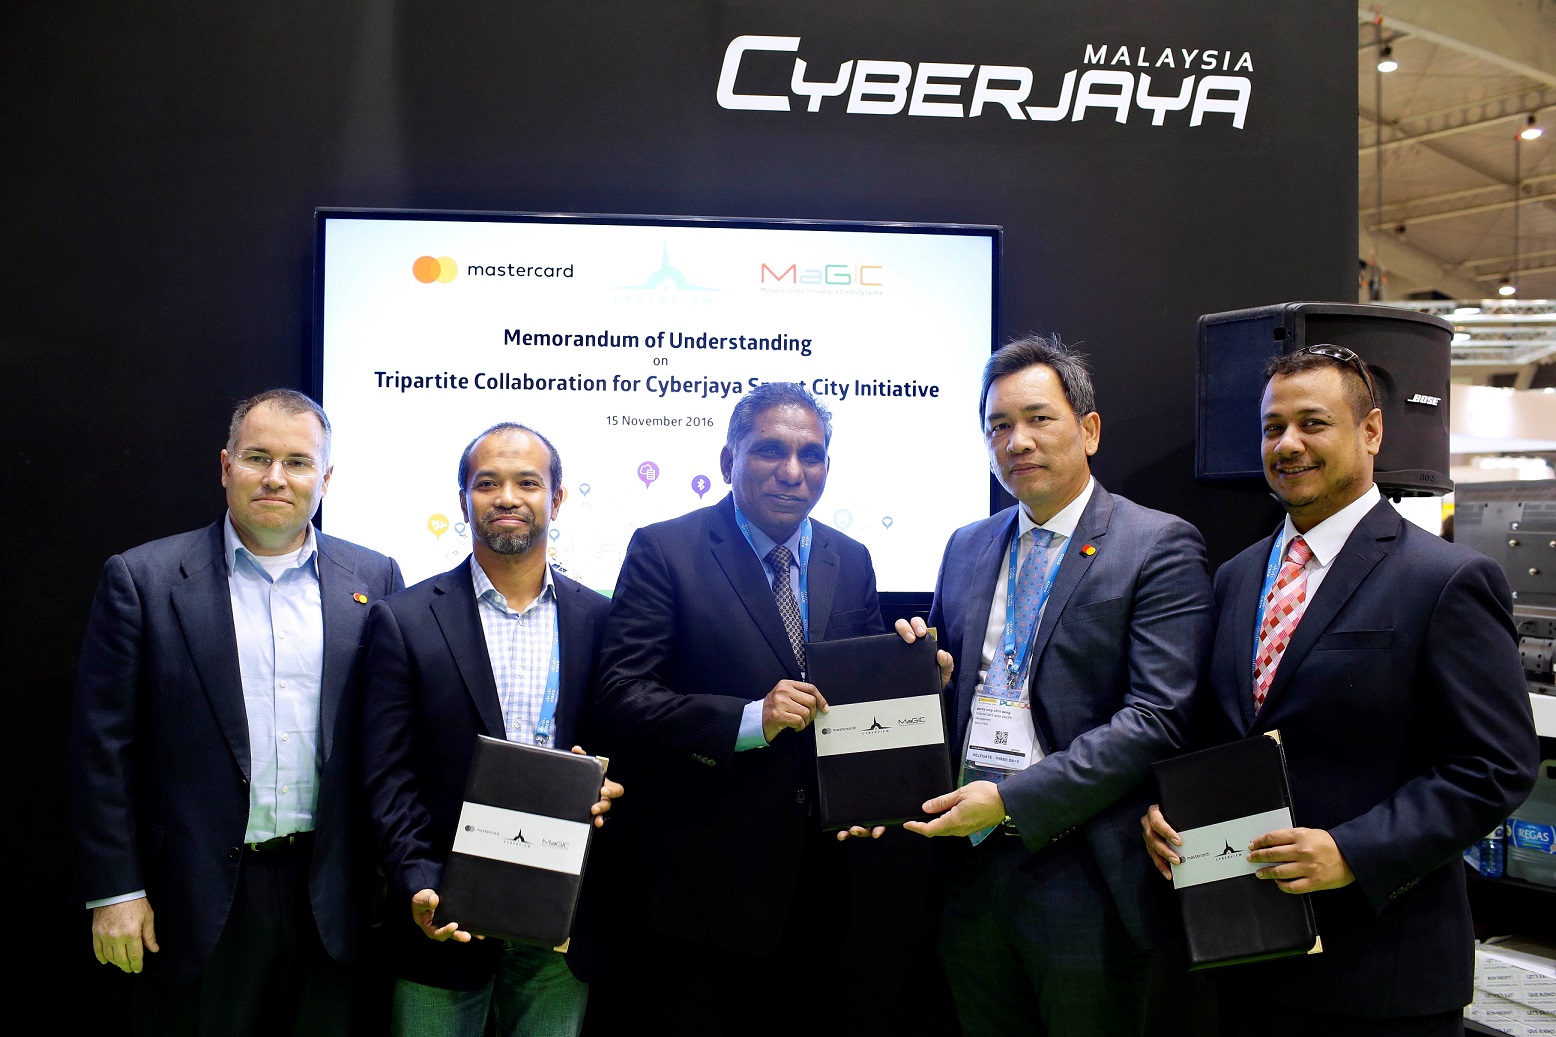 Cyberjaya smart city development accelerated with cashless society push